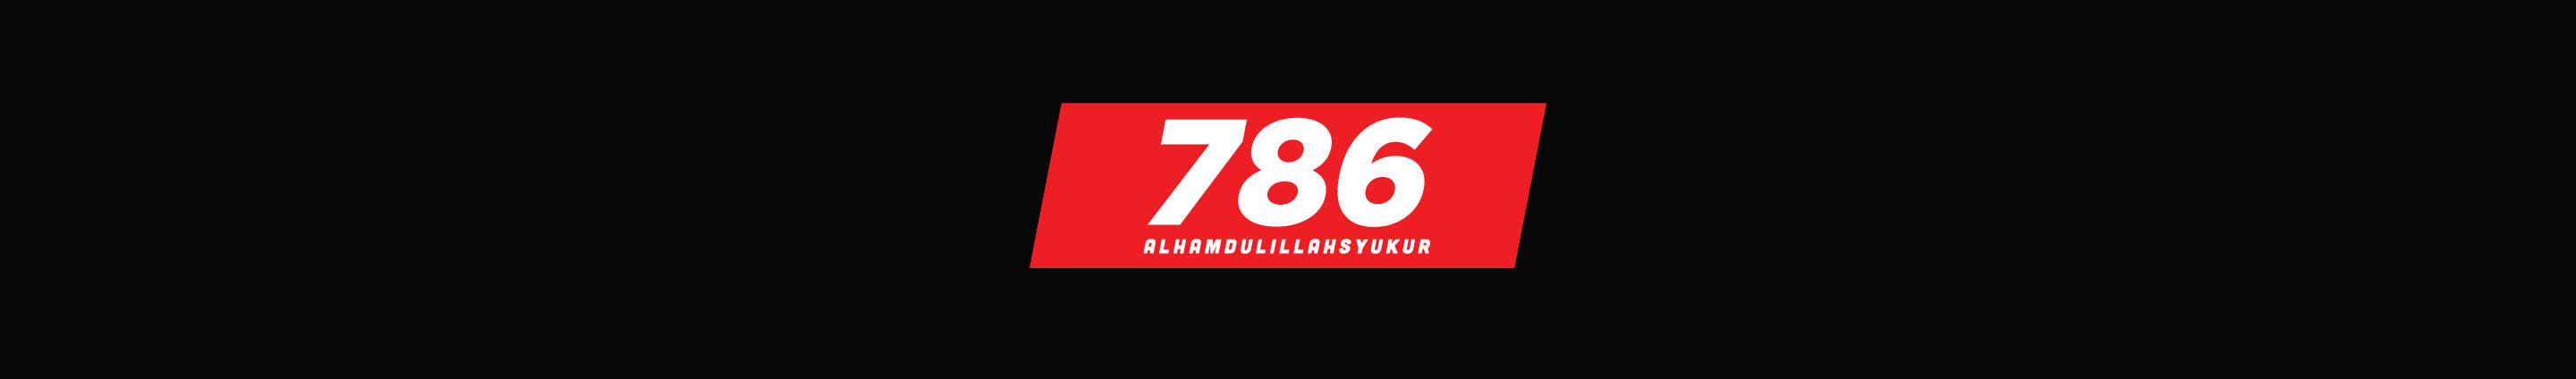 Amirul Azizie's profile banner